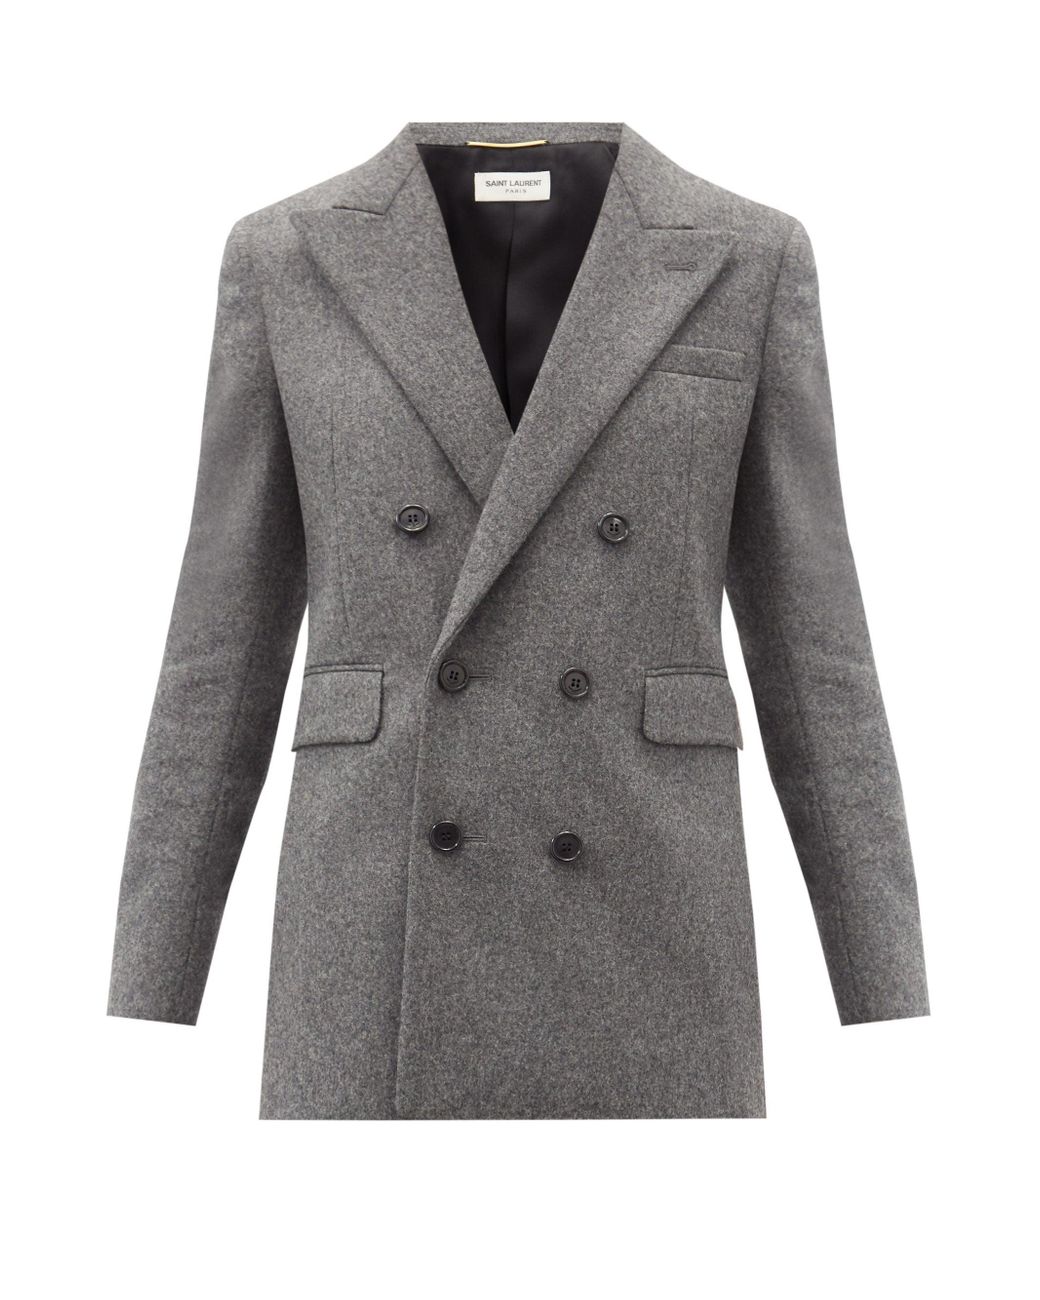 Saint Laurent Double-breasted Virgin-wool Jacket in Grey (Gray) - Lyst